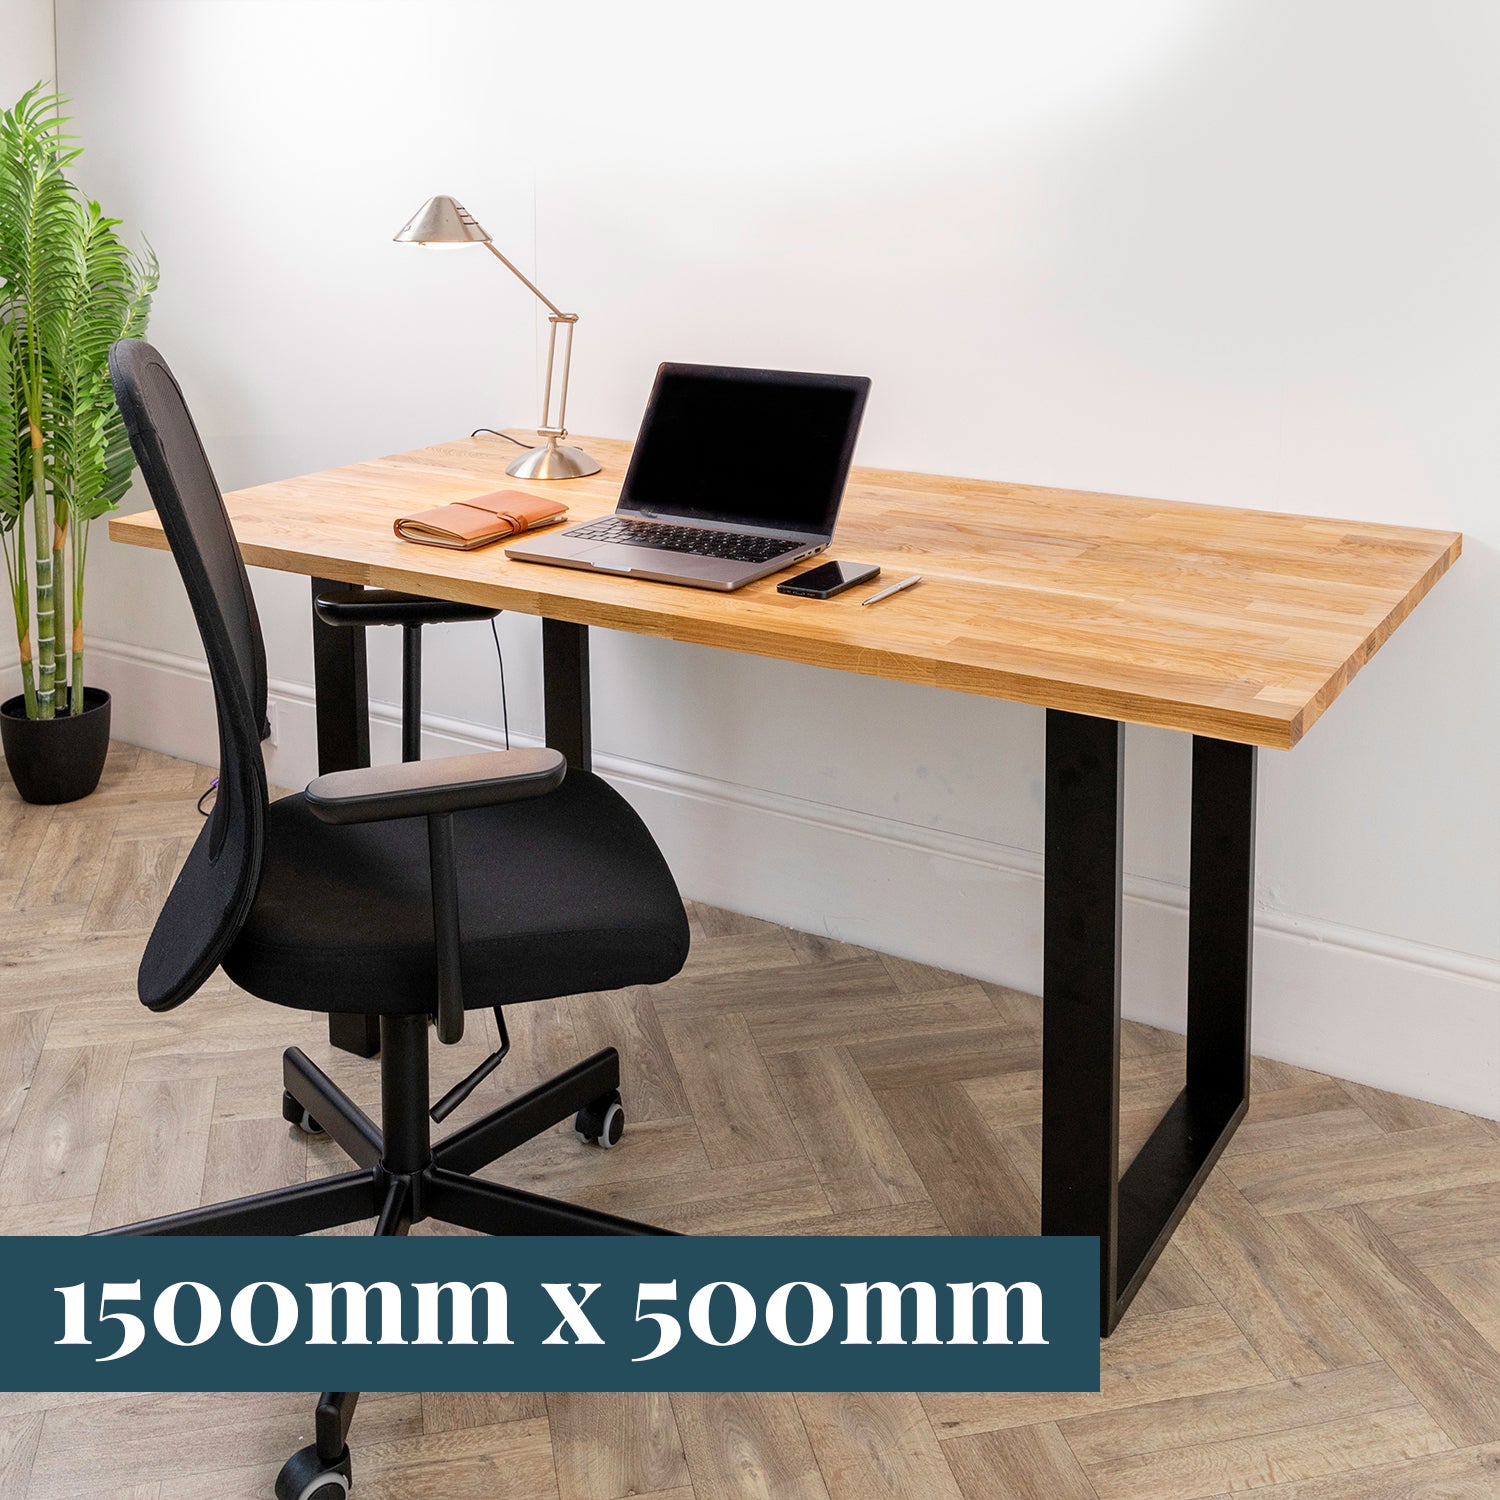 Oak Solid Wood Desk with Square Metal Legs - 27mm thick desktop #length_1500mm depth_500mm